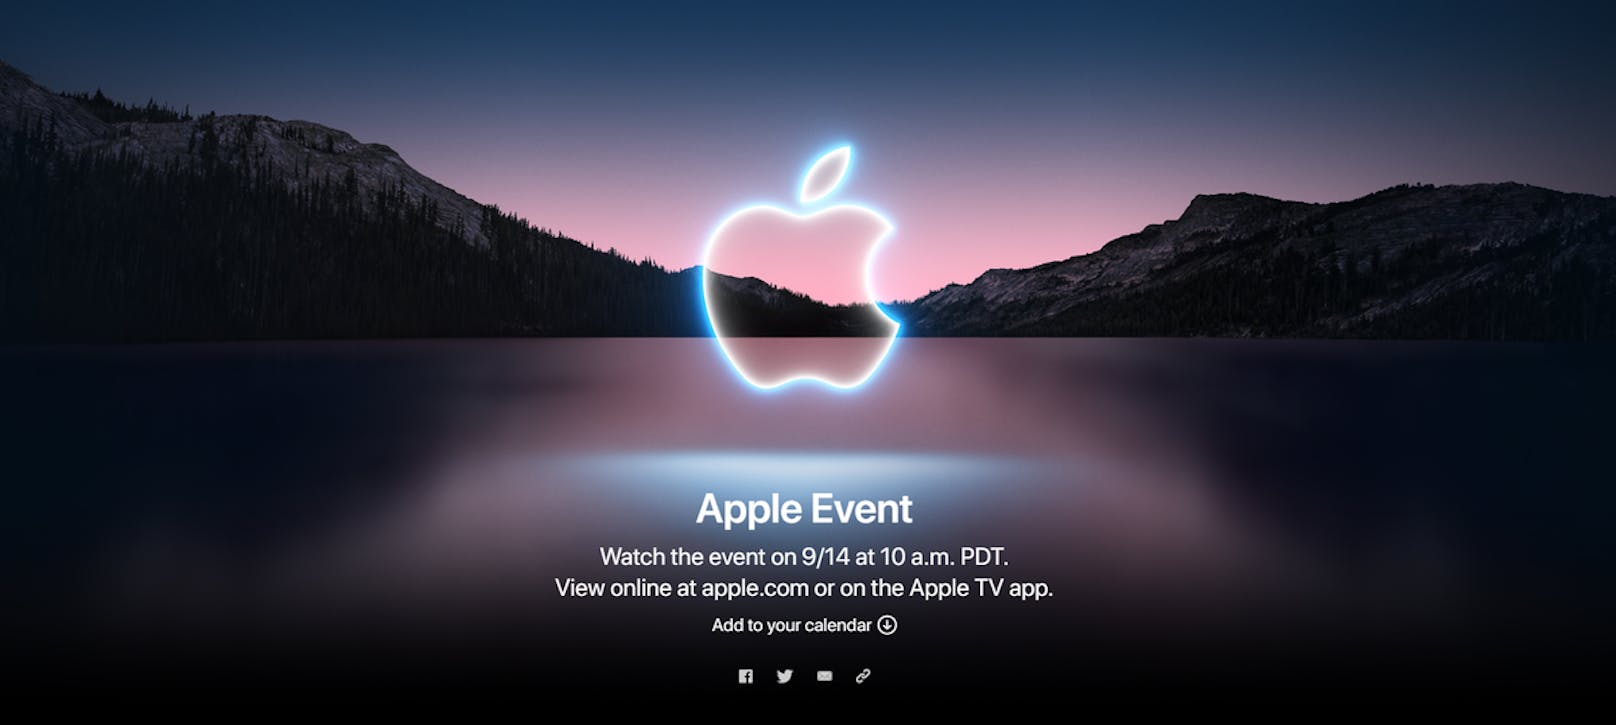 Das nächste Apple-Event findet am 14. September statt.